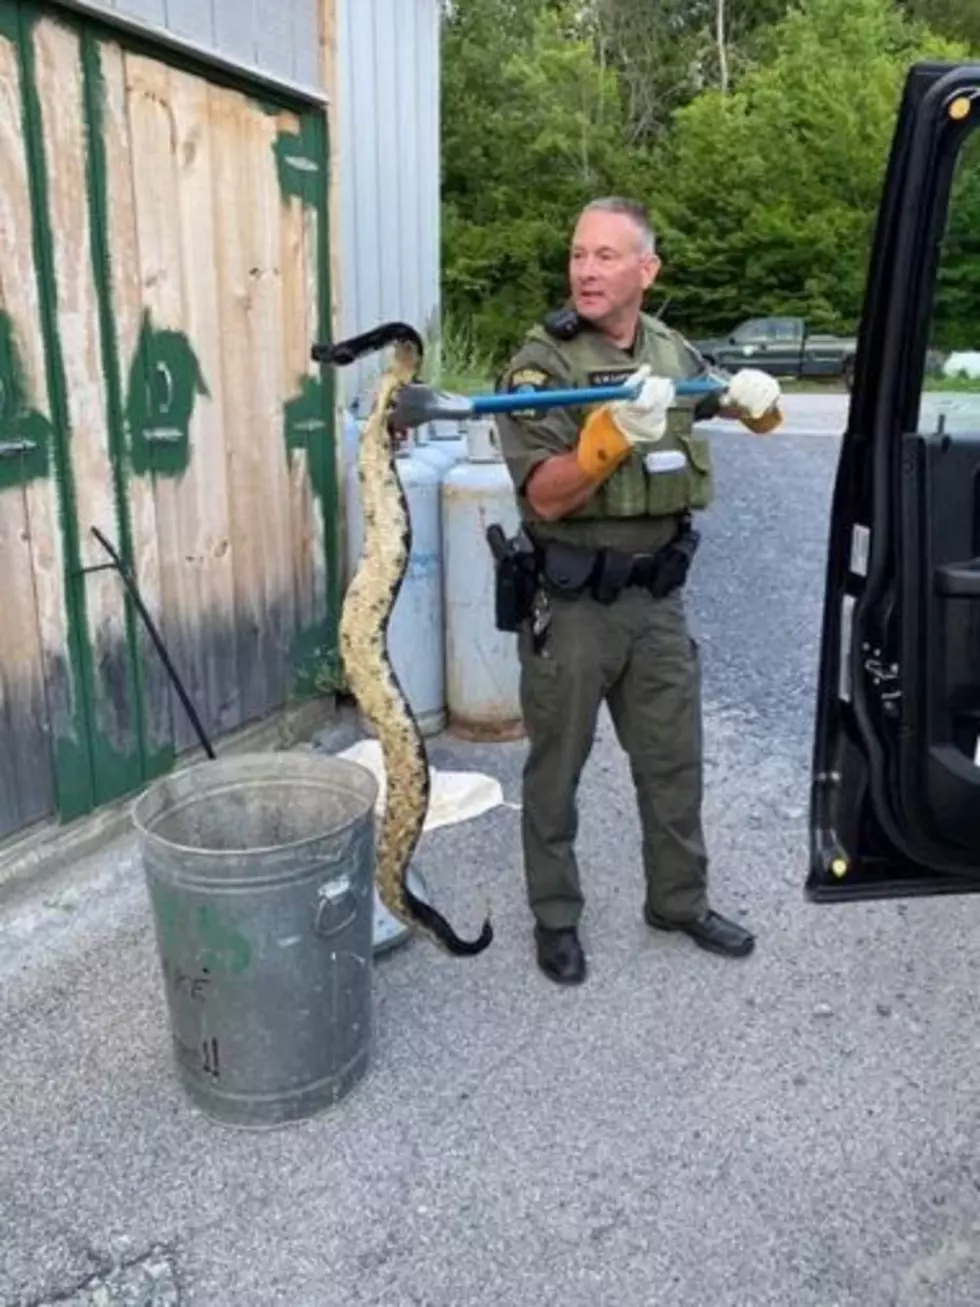 Enormous Snake ‘Rattles’ Family in Warren County